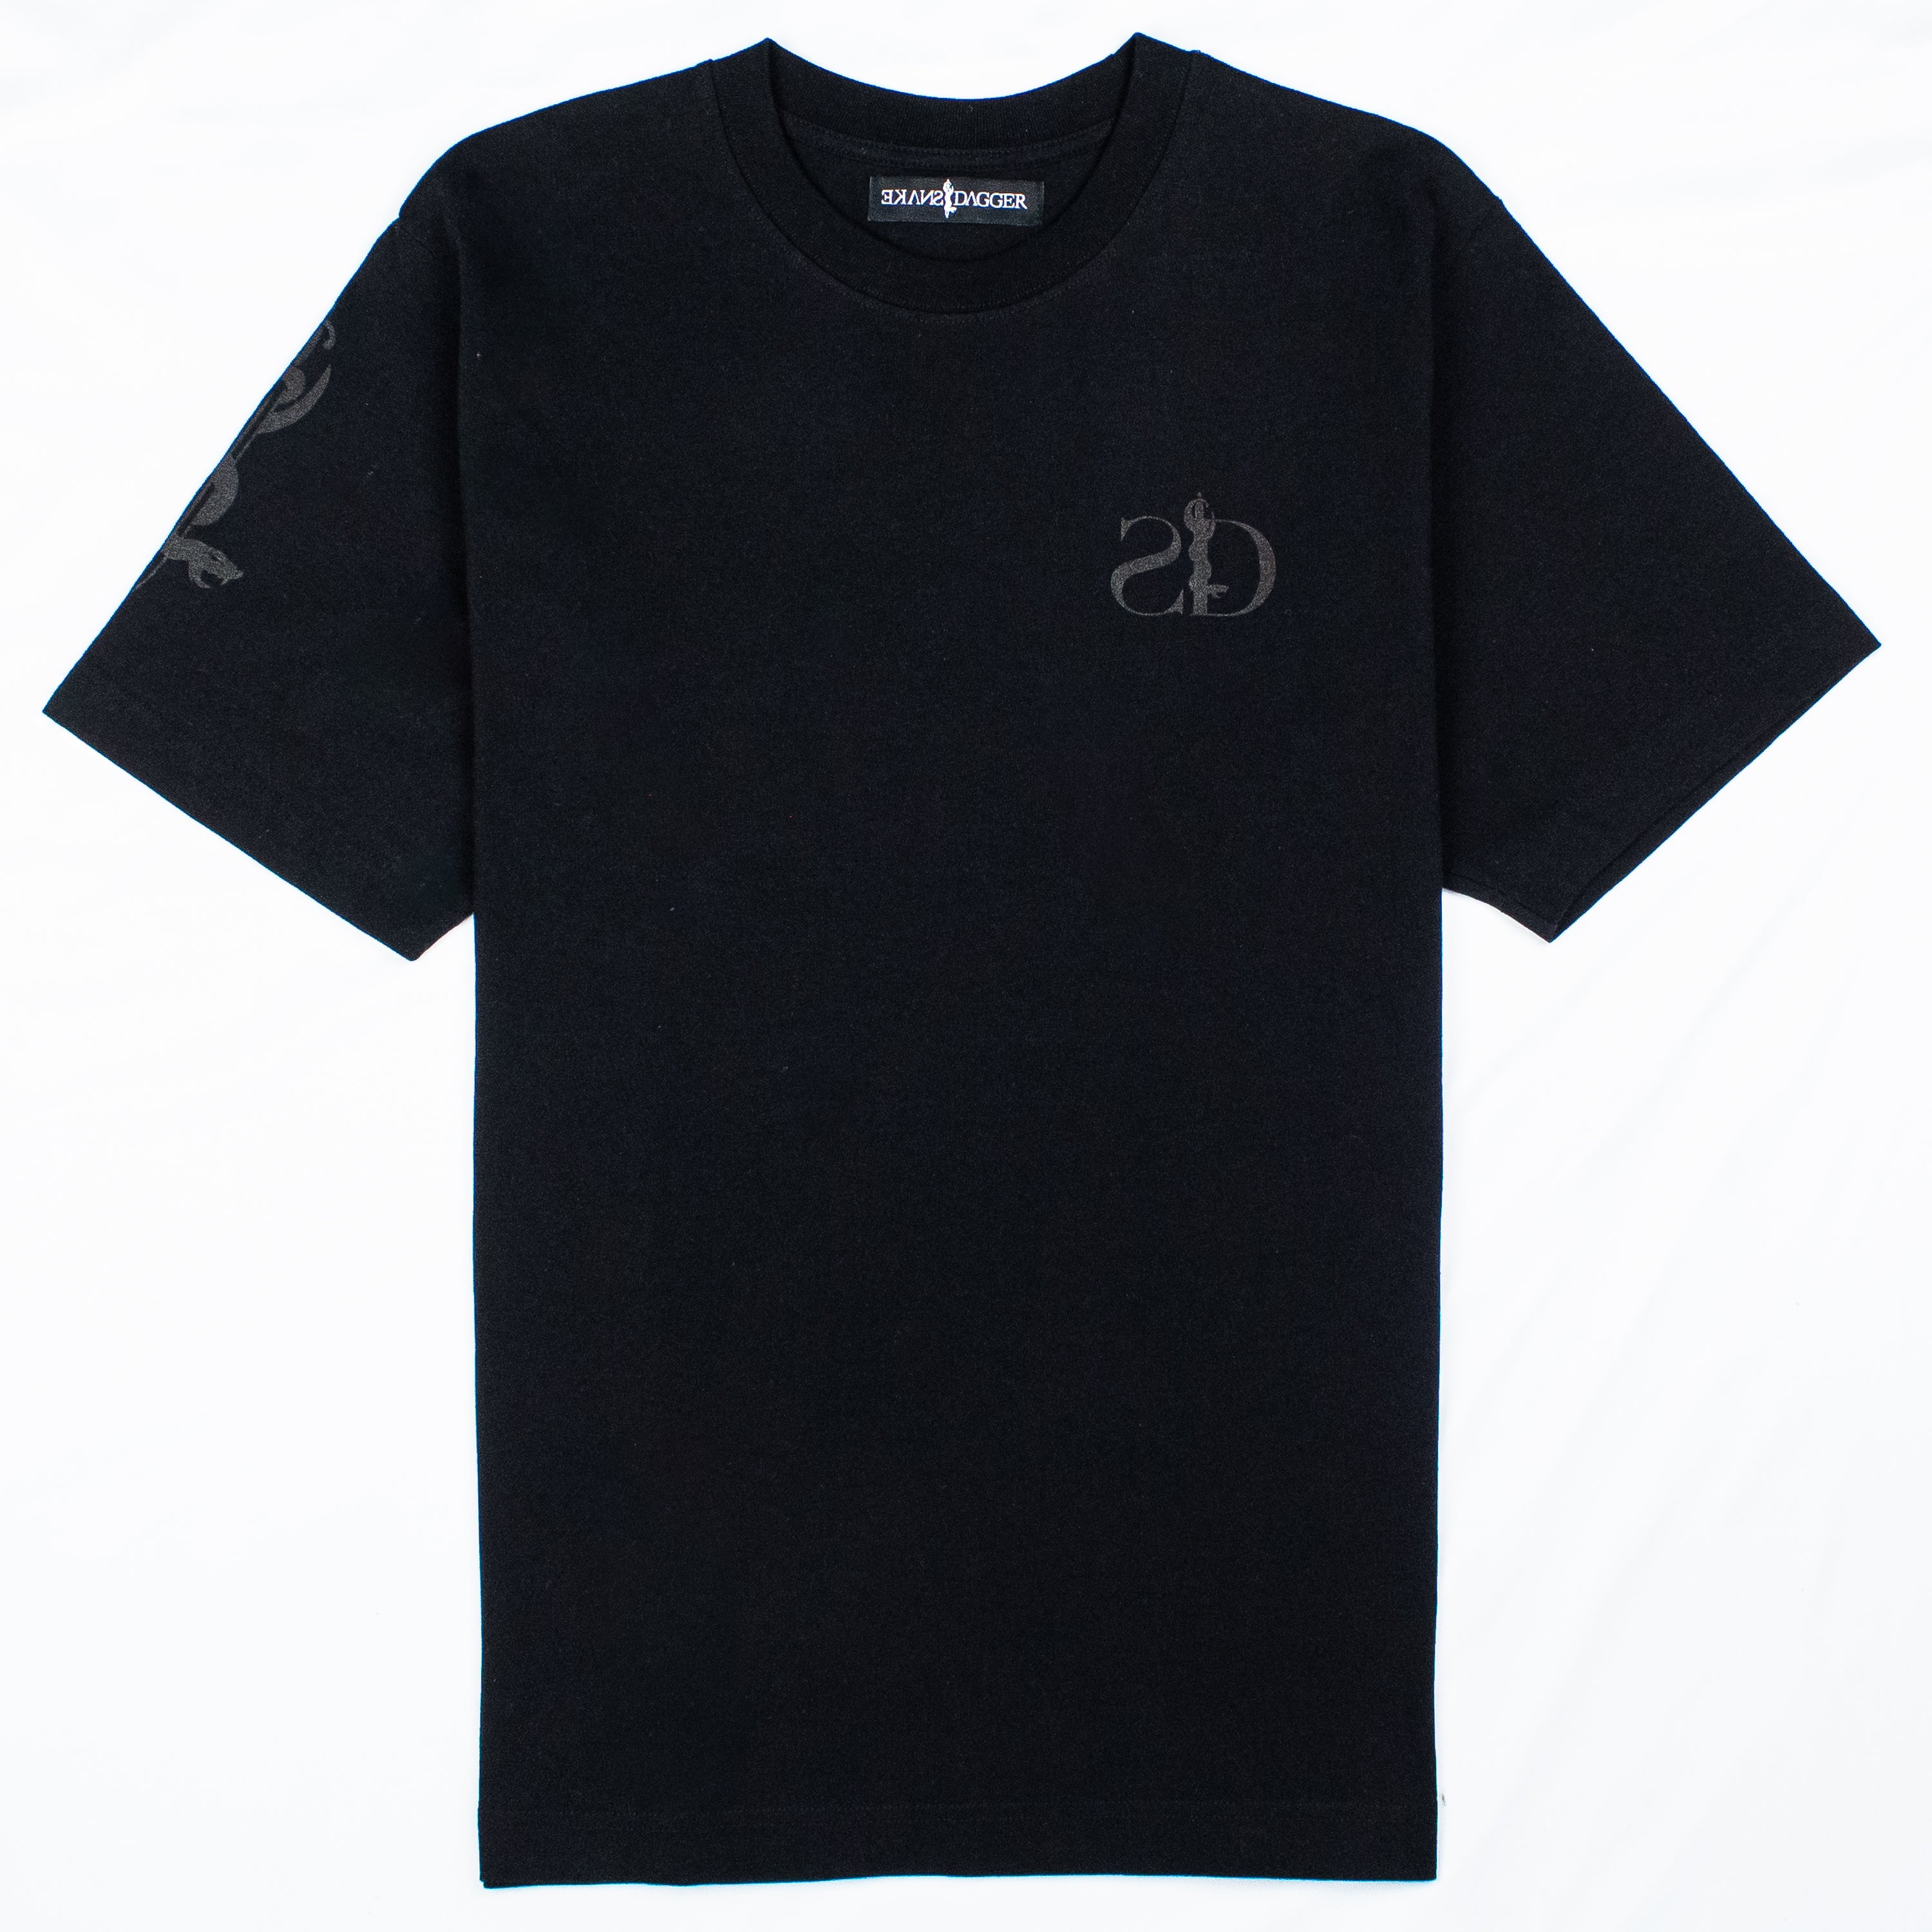 Black short sleeve multi logo t-shirt / black print design